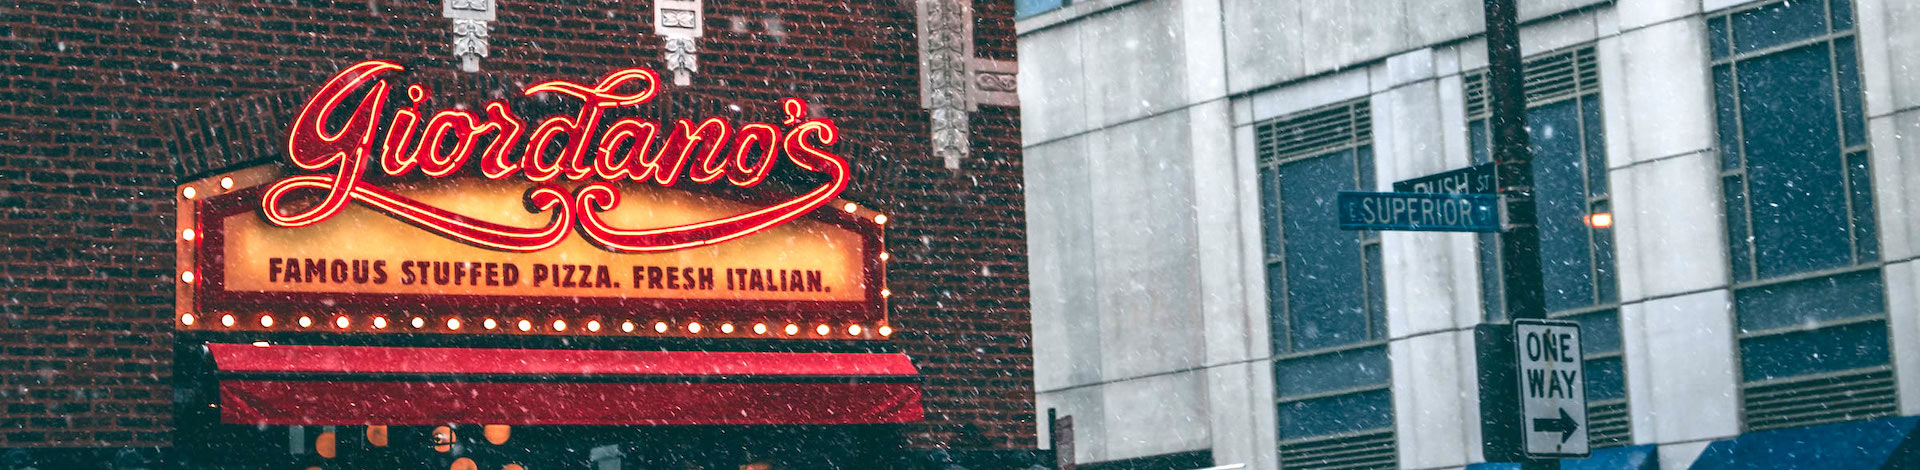 Giordano's Pizza assina Chicago